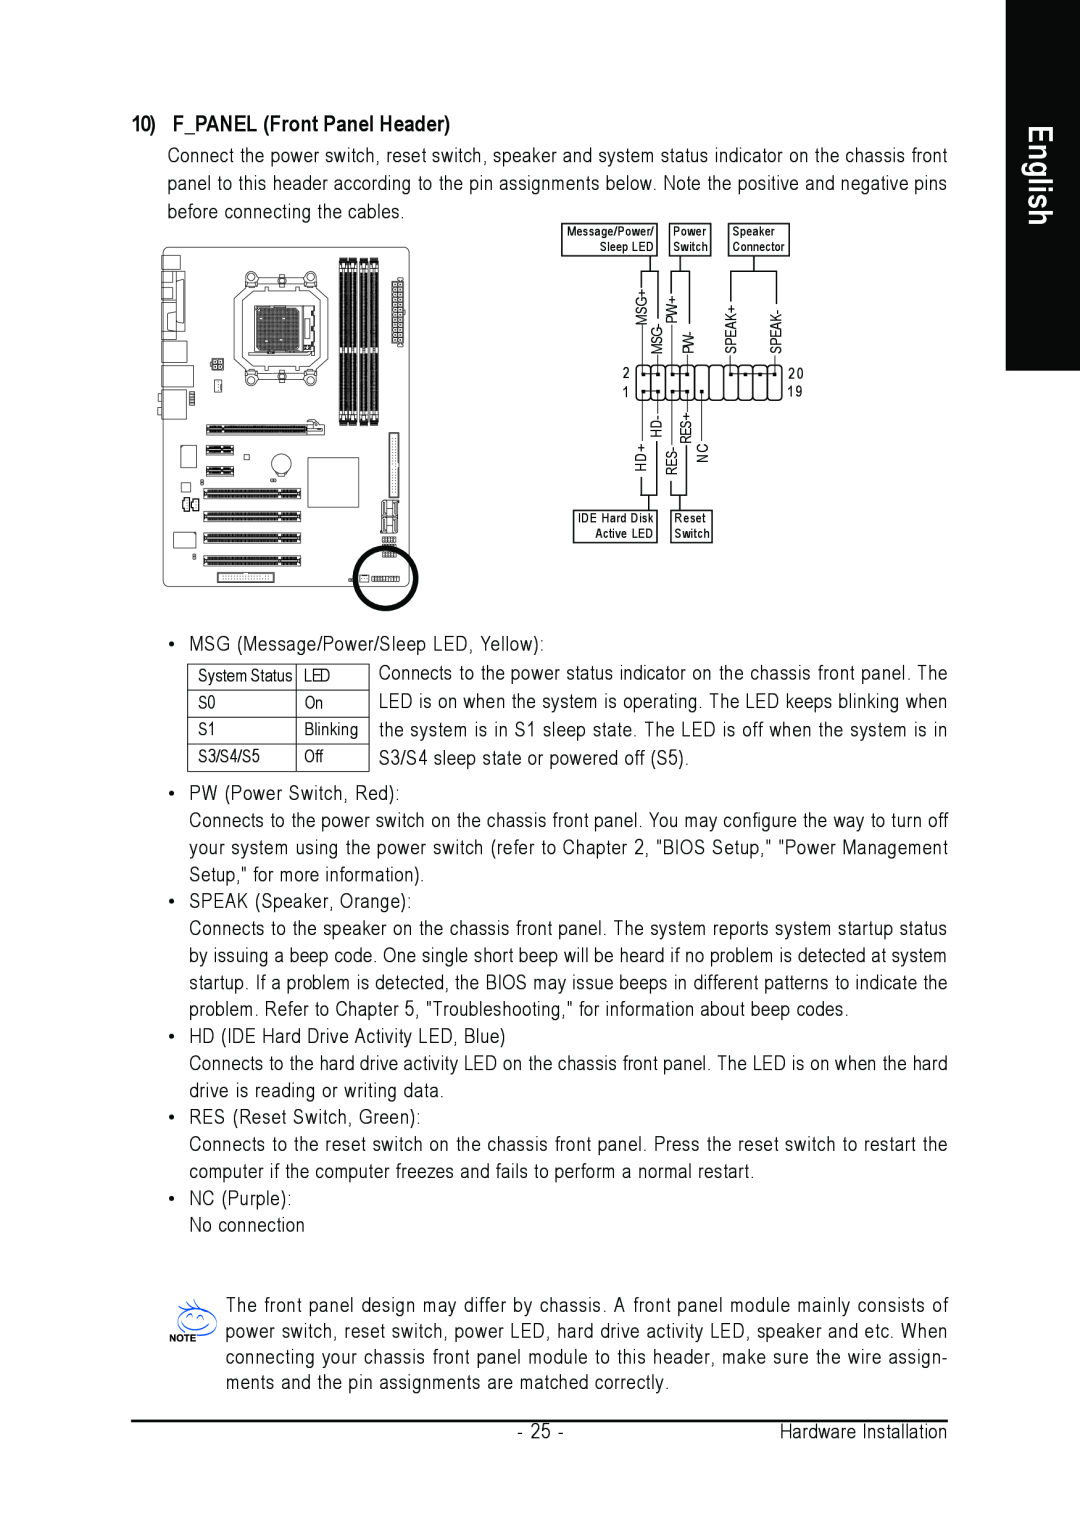 Gigabyte GA-M52S-S3P user manual FPANEL Front Panel Header, English 